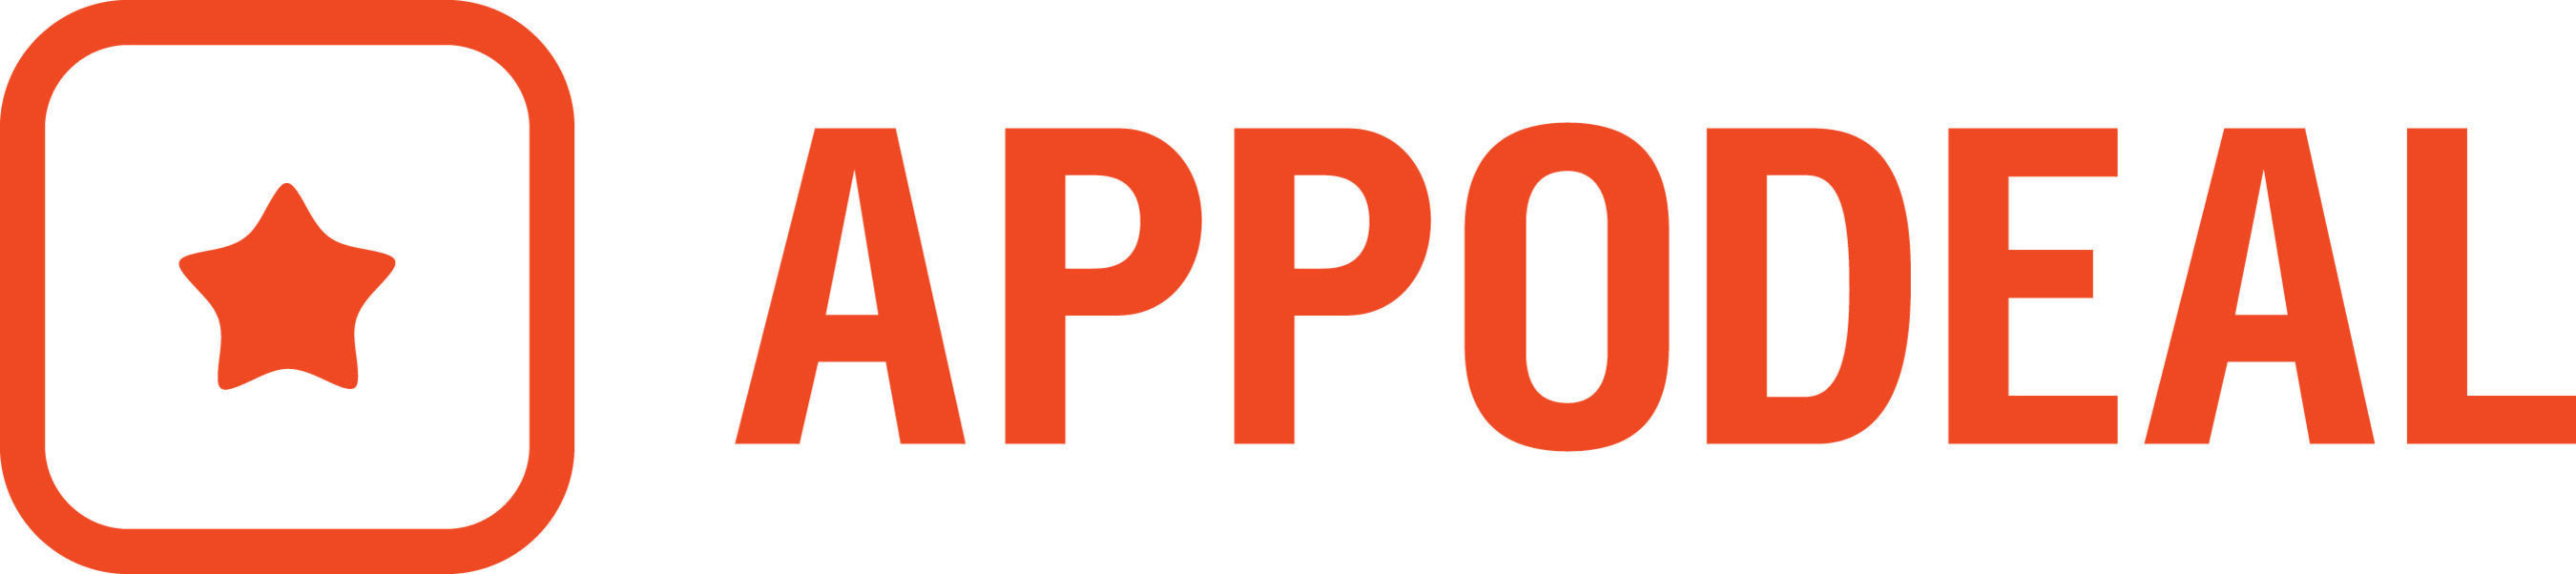 Appodeal logo (PRNewsFoto/Appodeal)